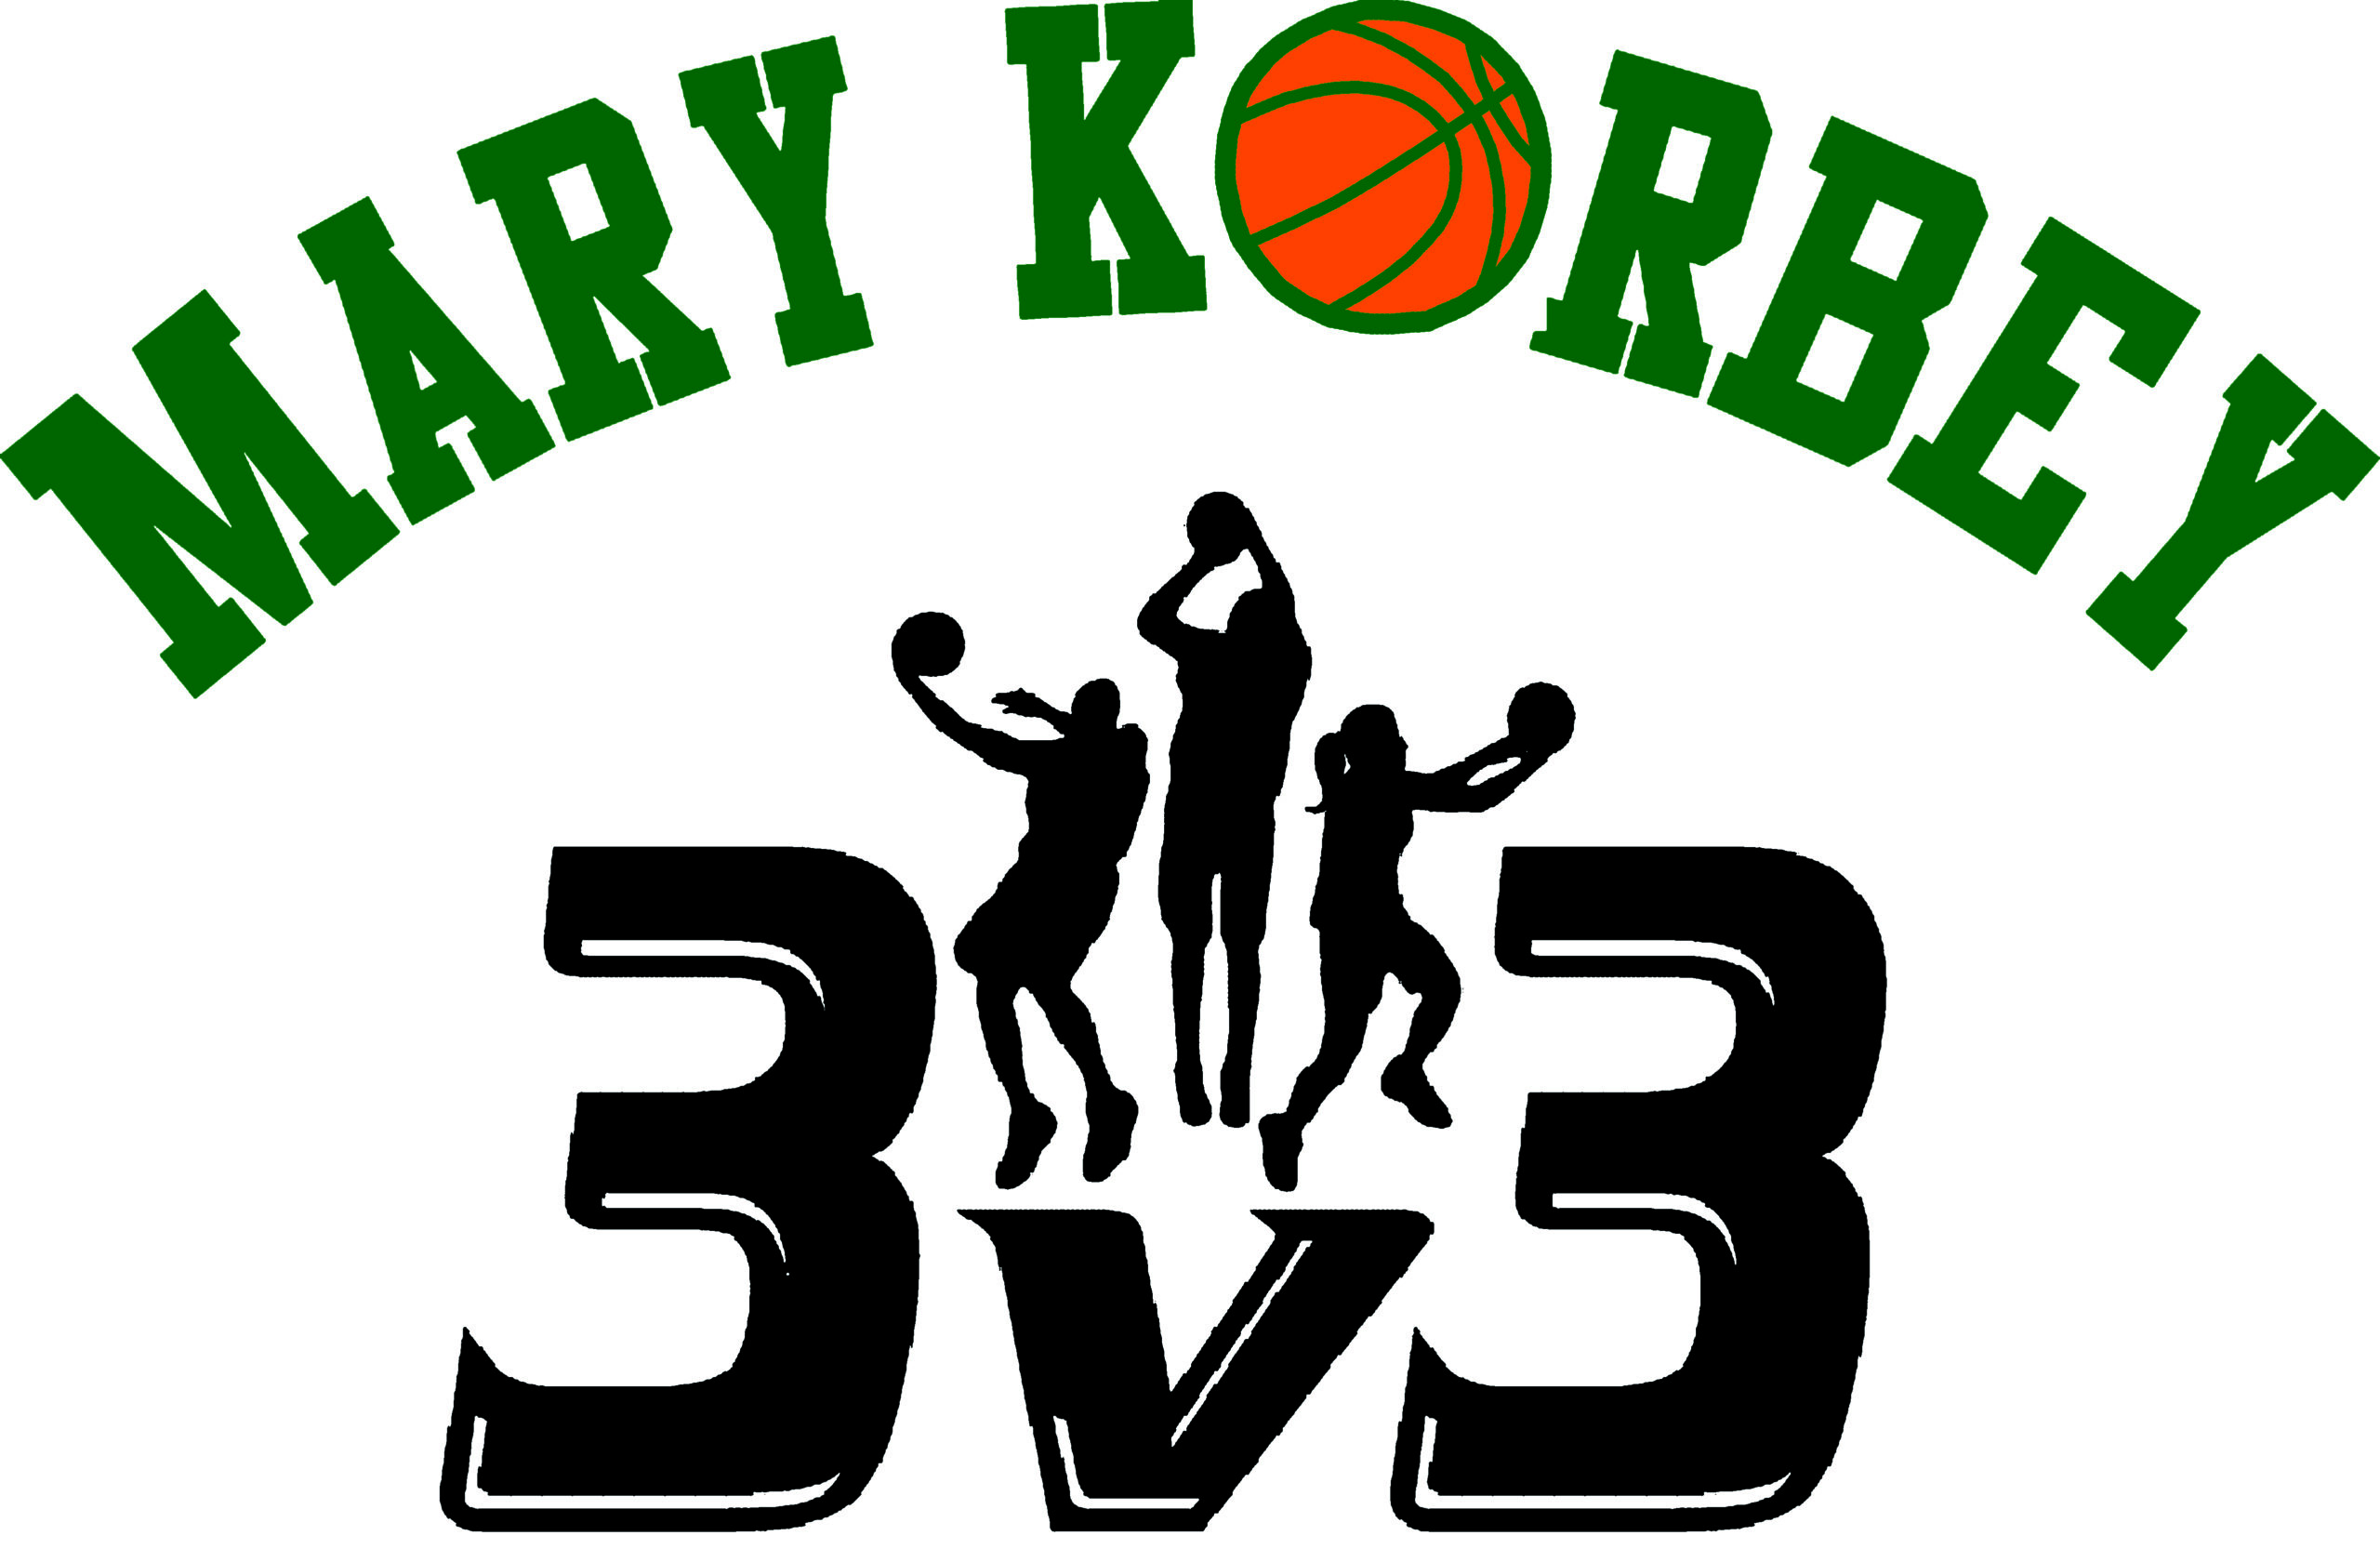 Mary Korbey 3v3 Basketball Tournament March 17